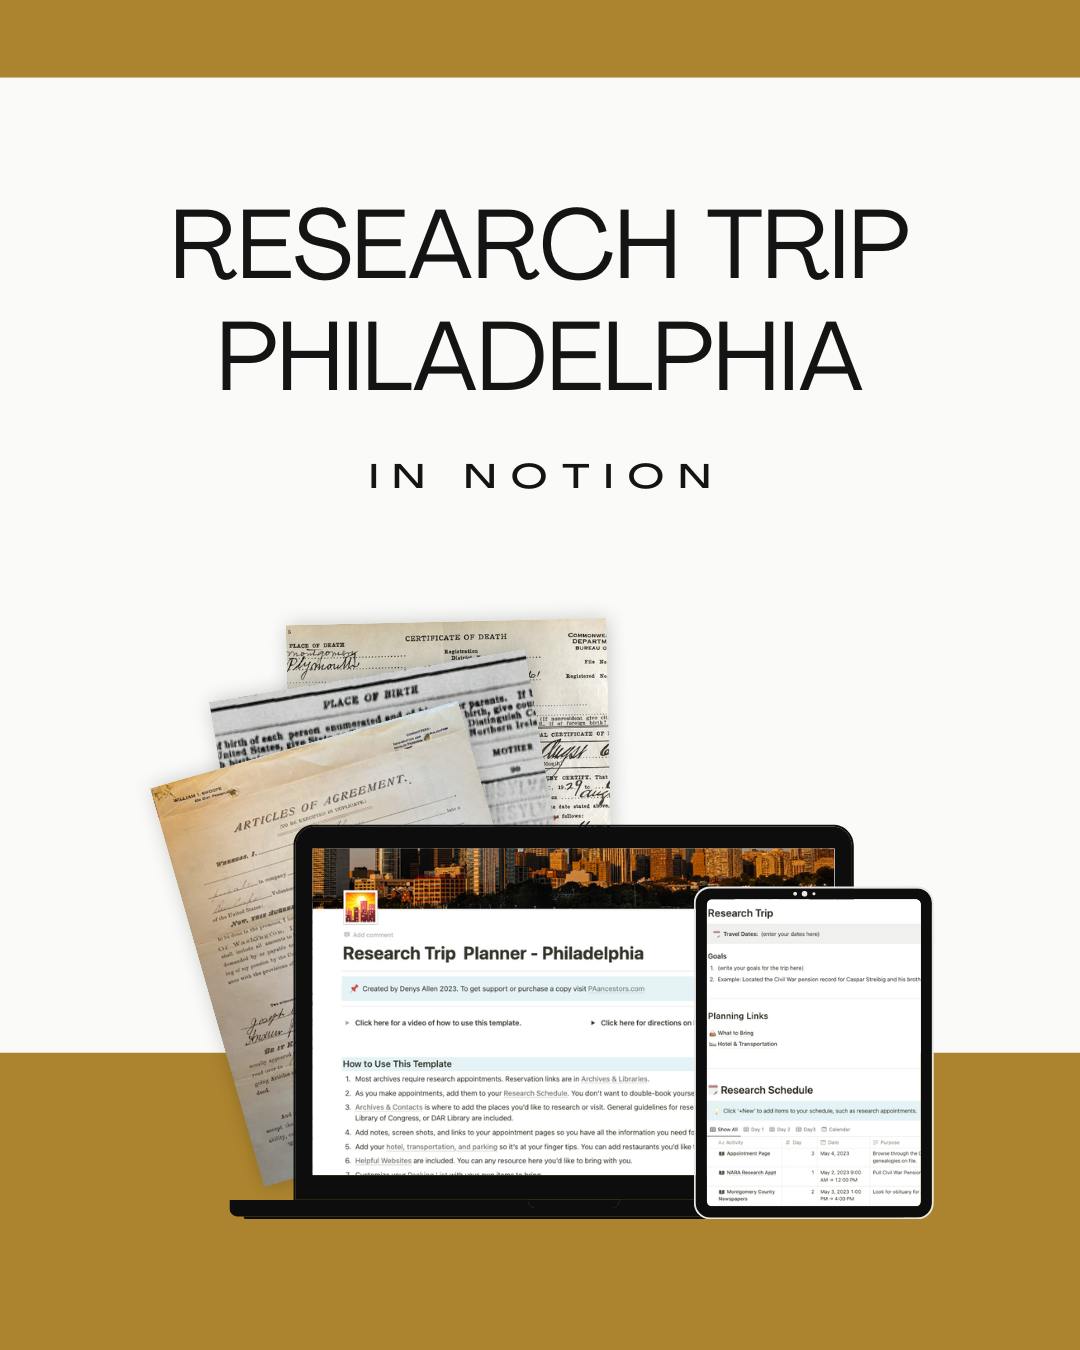 Research Trip Planner - Philadelphia